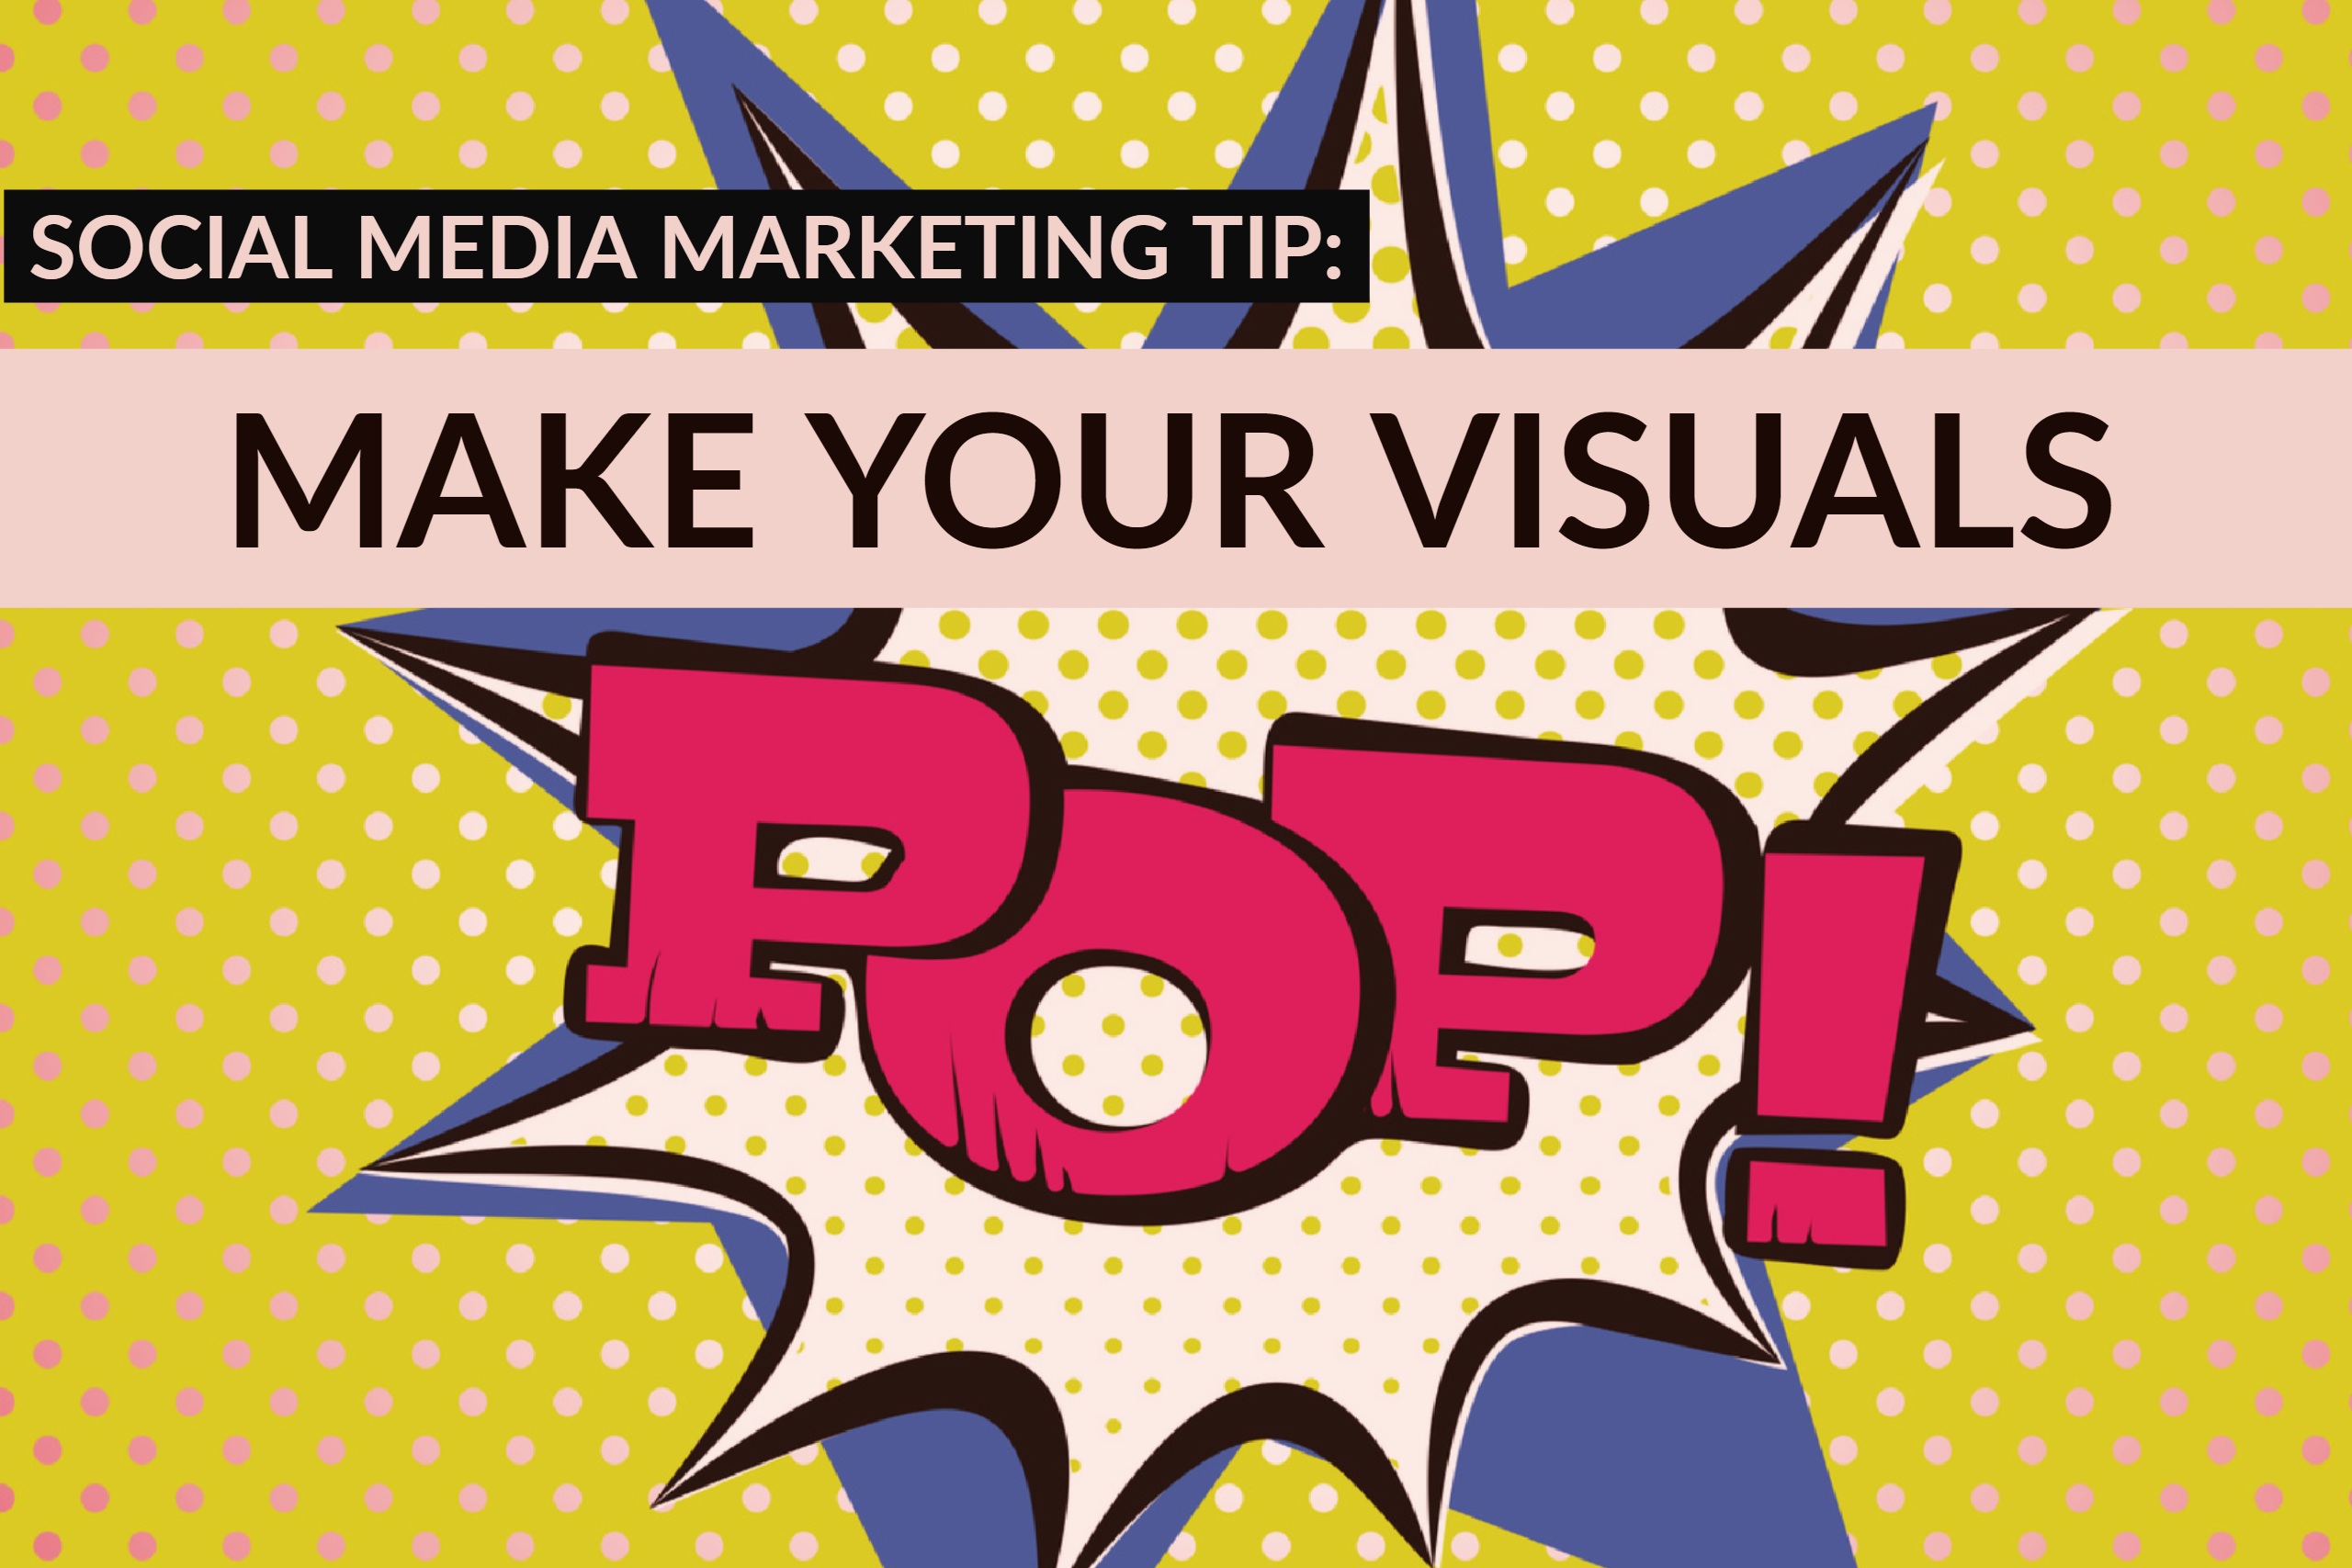 Social Media Marketing Tip: Make Your Visuals Pop